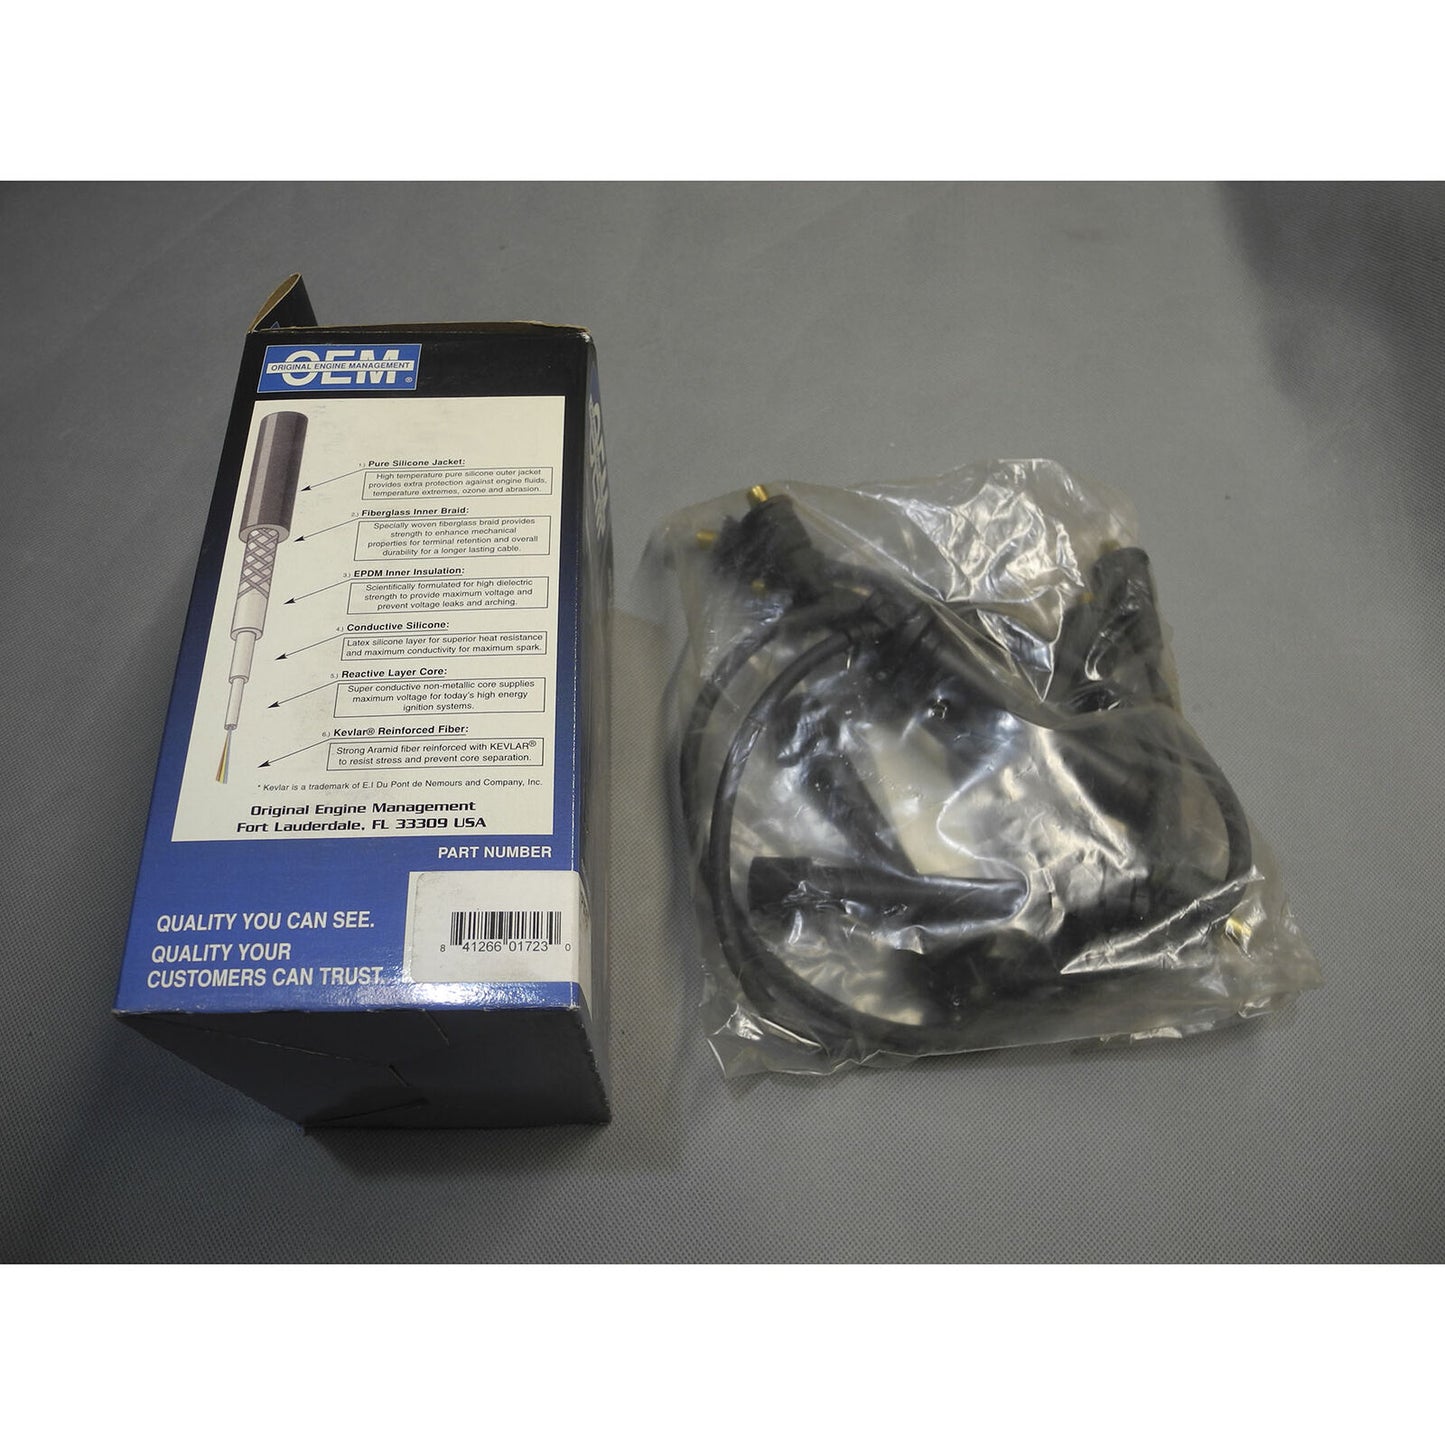 Brand New Spark Plug Wire Set OEM PI4907 For 1995-1997 Suzuki Esteem 1.6L